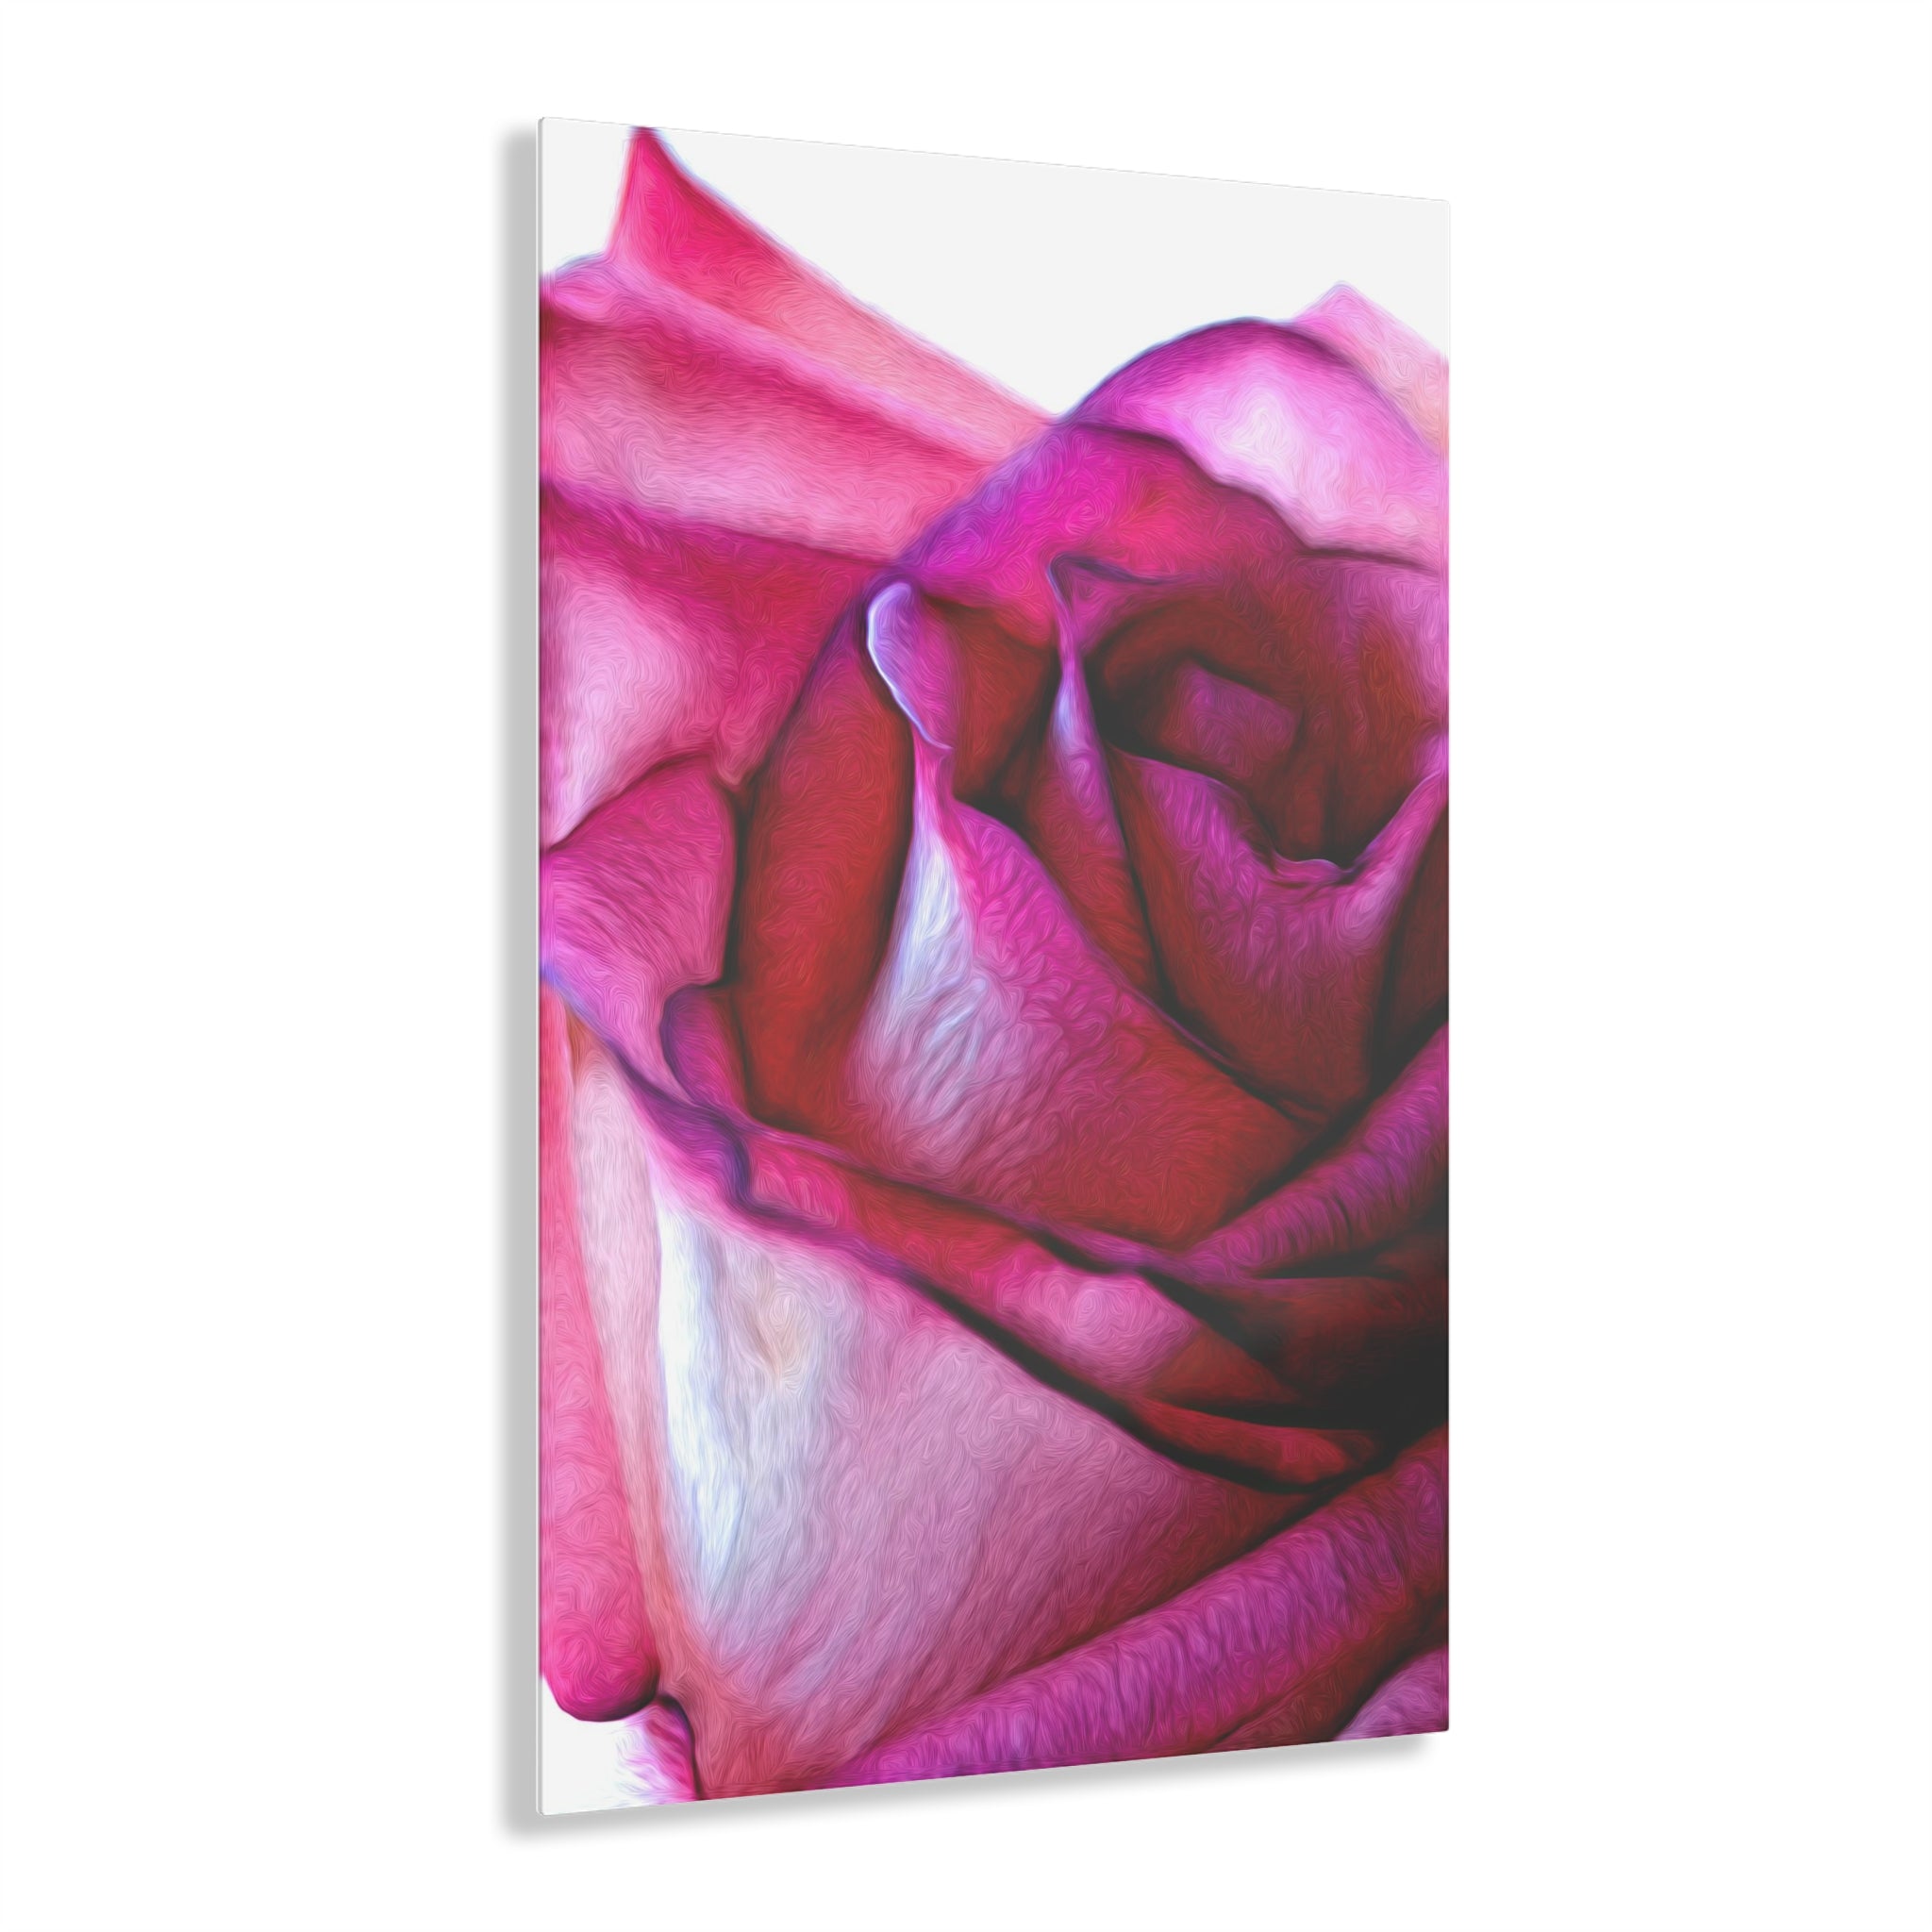 Pinked Rose Details Acrylic Print